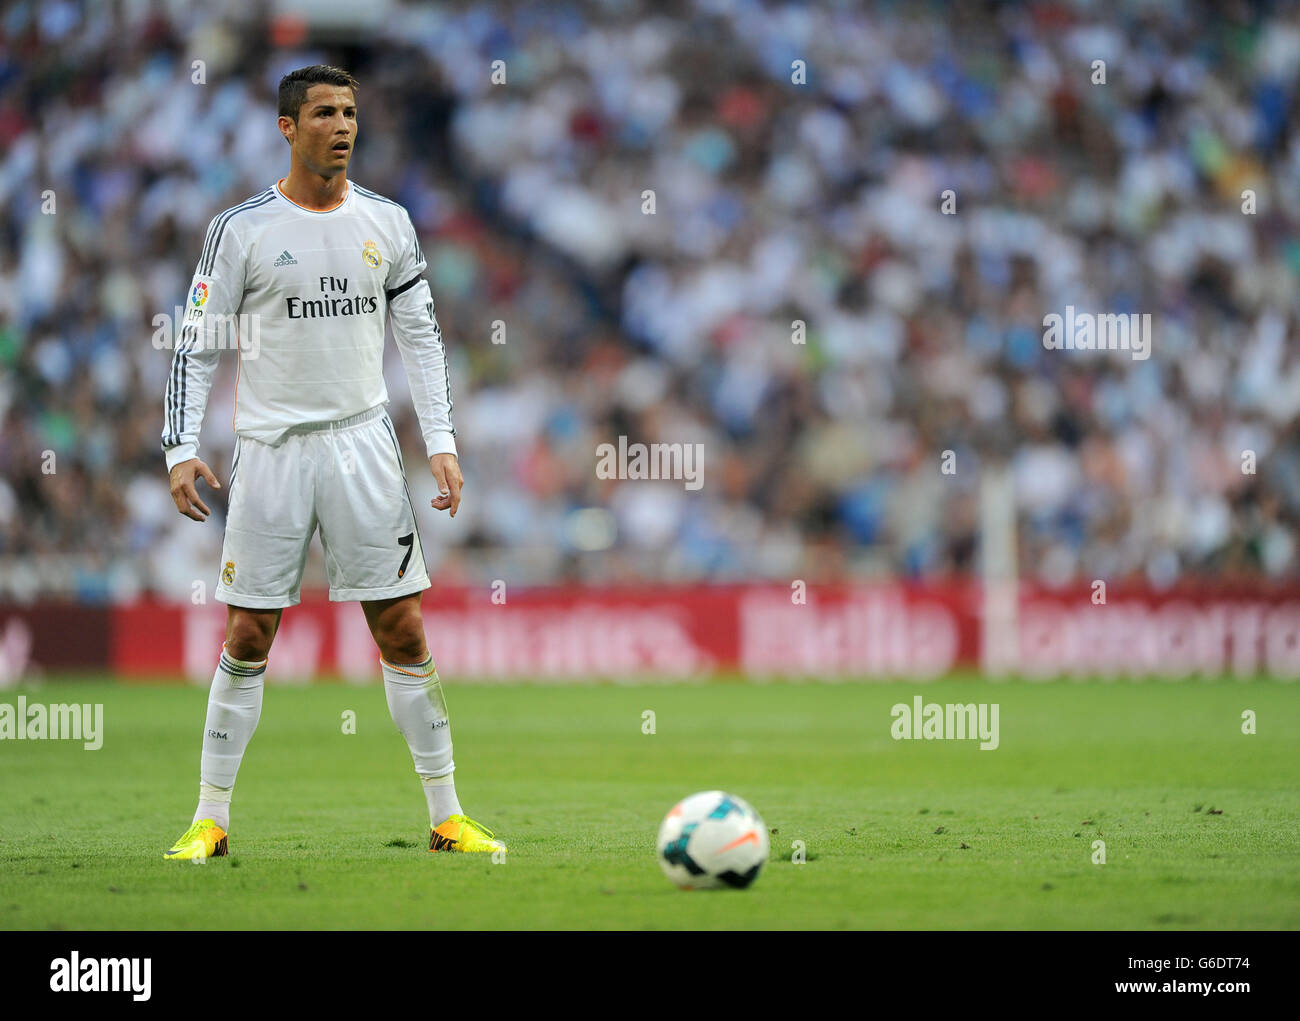 Real Madrid's Cristiano Ronaldo lines up a free kick during the La Liga match at Santiago Bernabeu, Madrid, Spain. Stock Photo